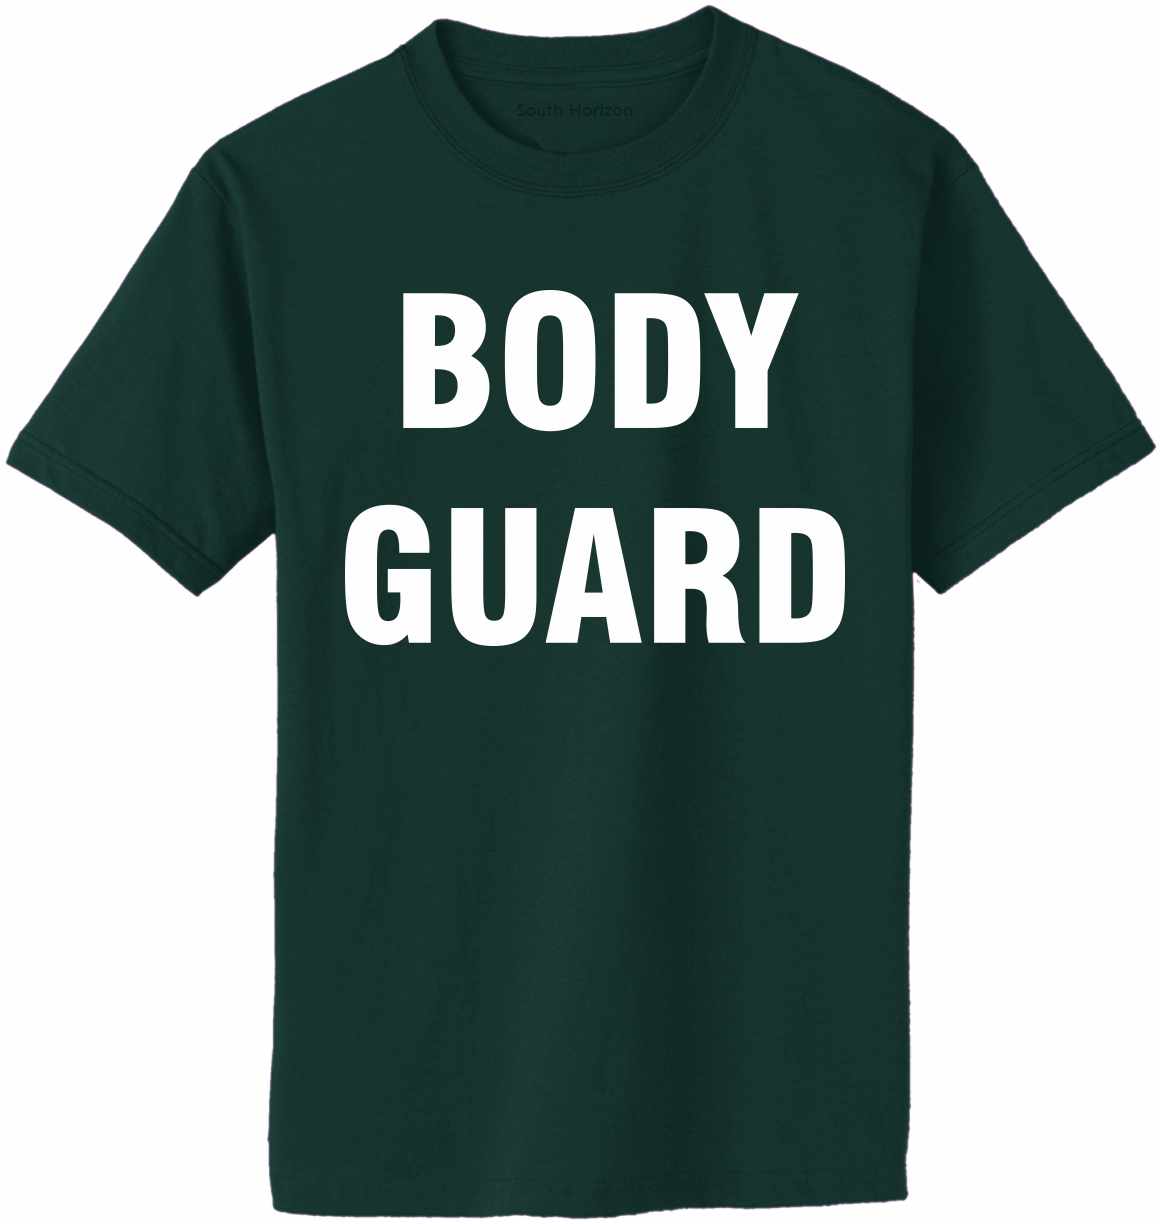 BODY GUARD Adult T-Shirt